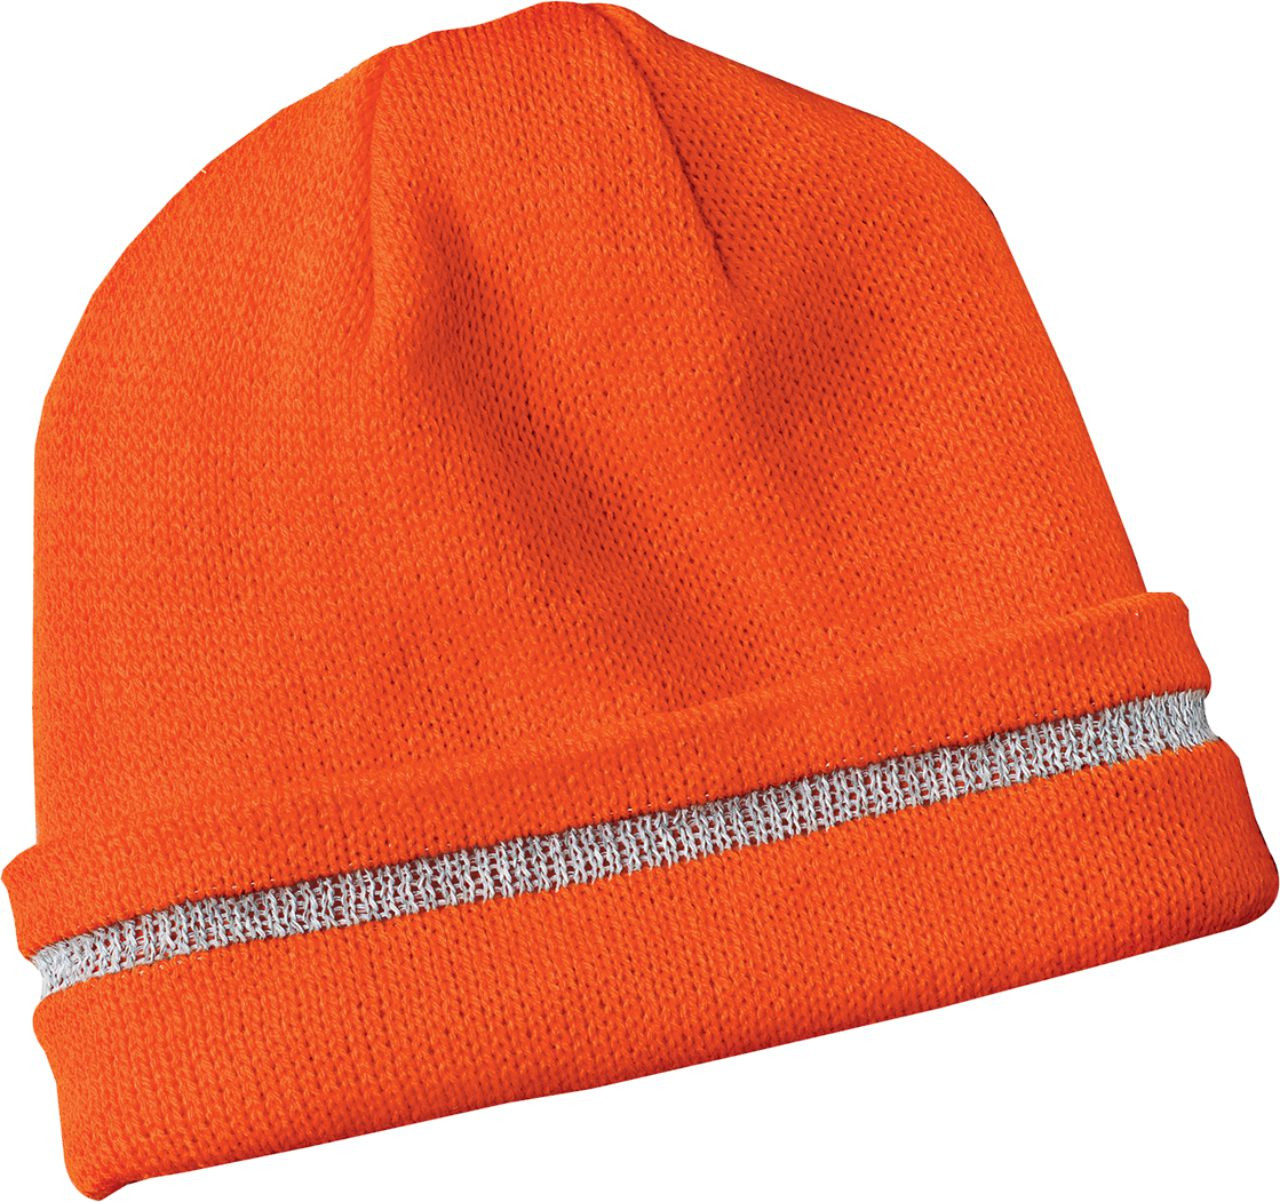 HiVis Safety Orange Beanie with Reflective Stripe | Bright Orange Safety Beanie | Hi Vis Orange Beanie